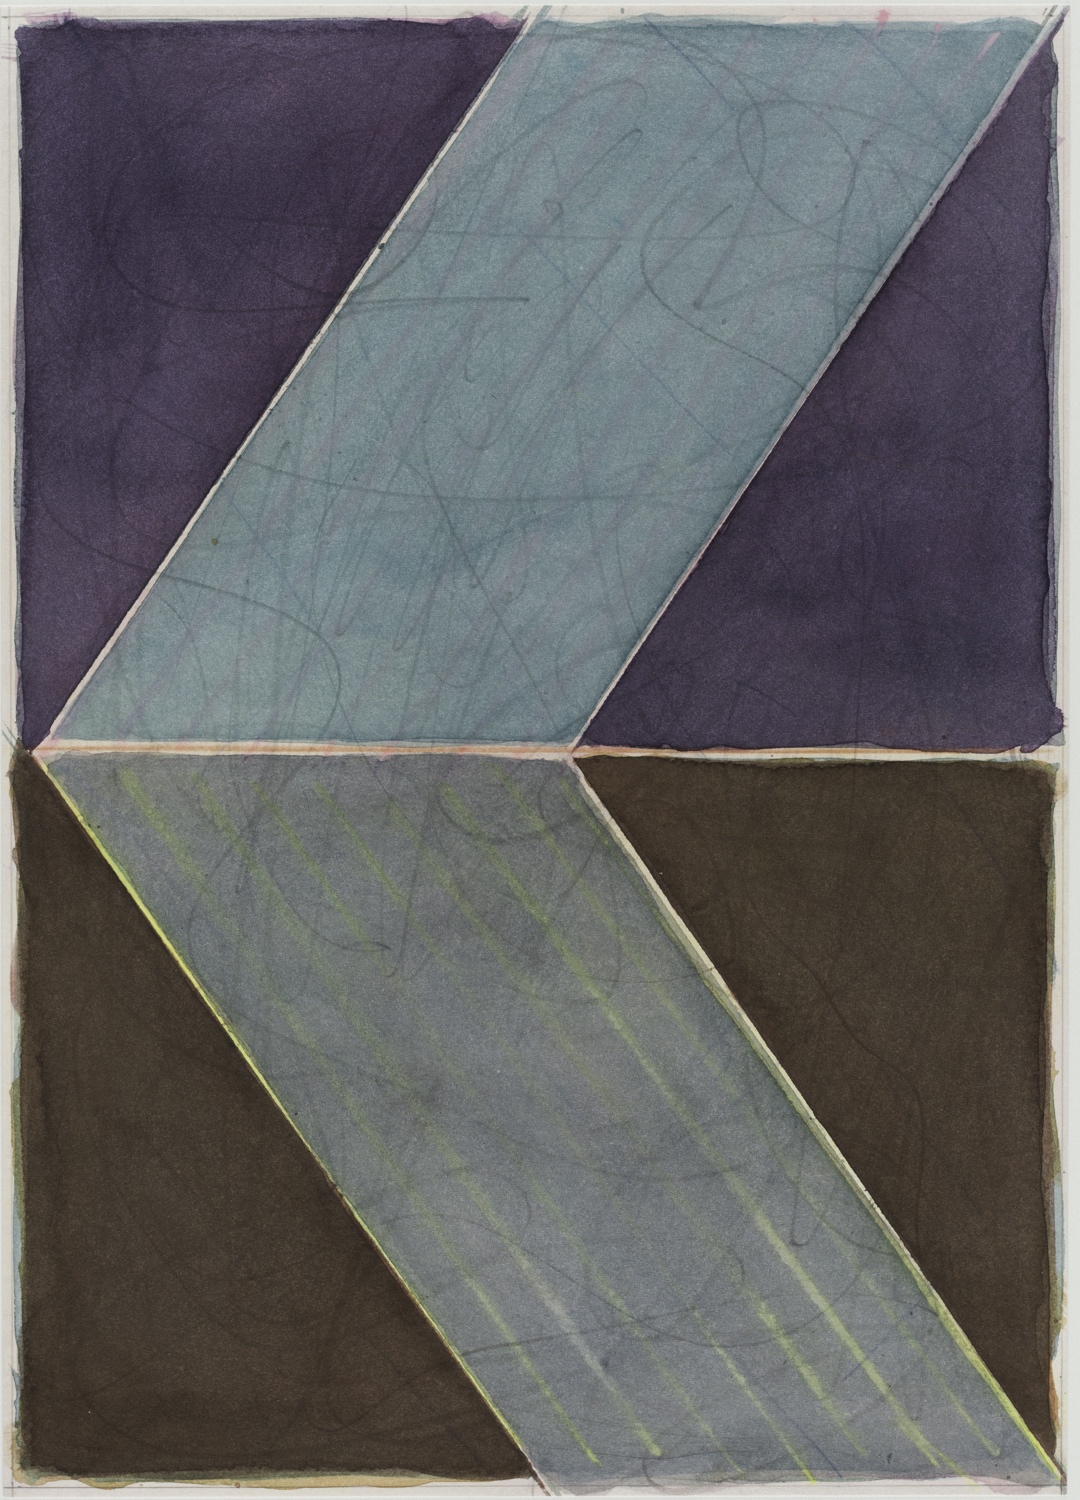 Pius Fox, (Untitled PF 14-099), Watercolour and pencil on paper, 32.2 x 22.9 cm, 2014